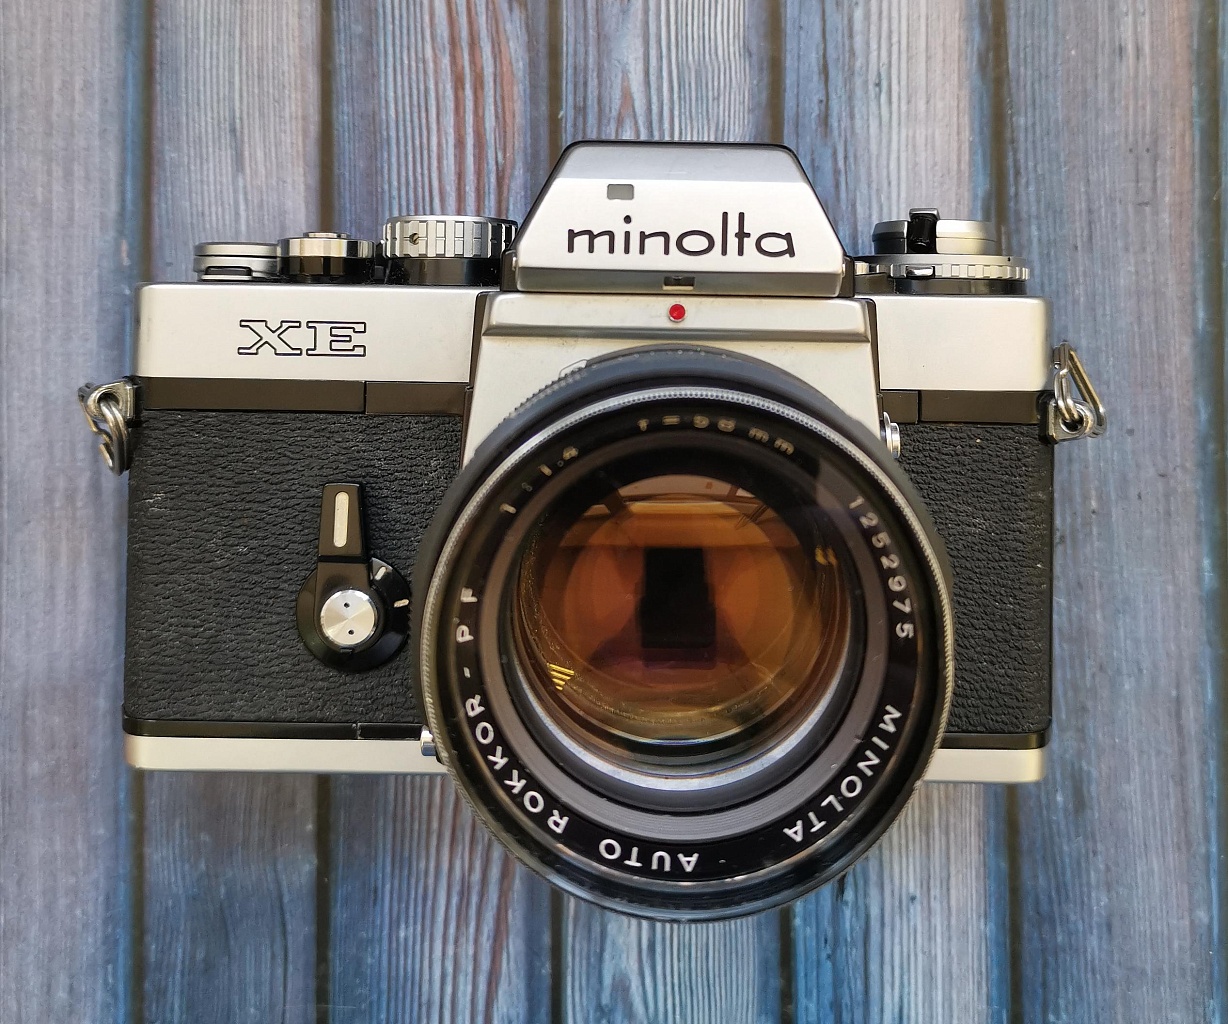 Minolta XE + Minolta auto rokkor-pf 58 mm f/1.4 фото №1